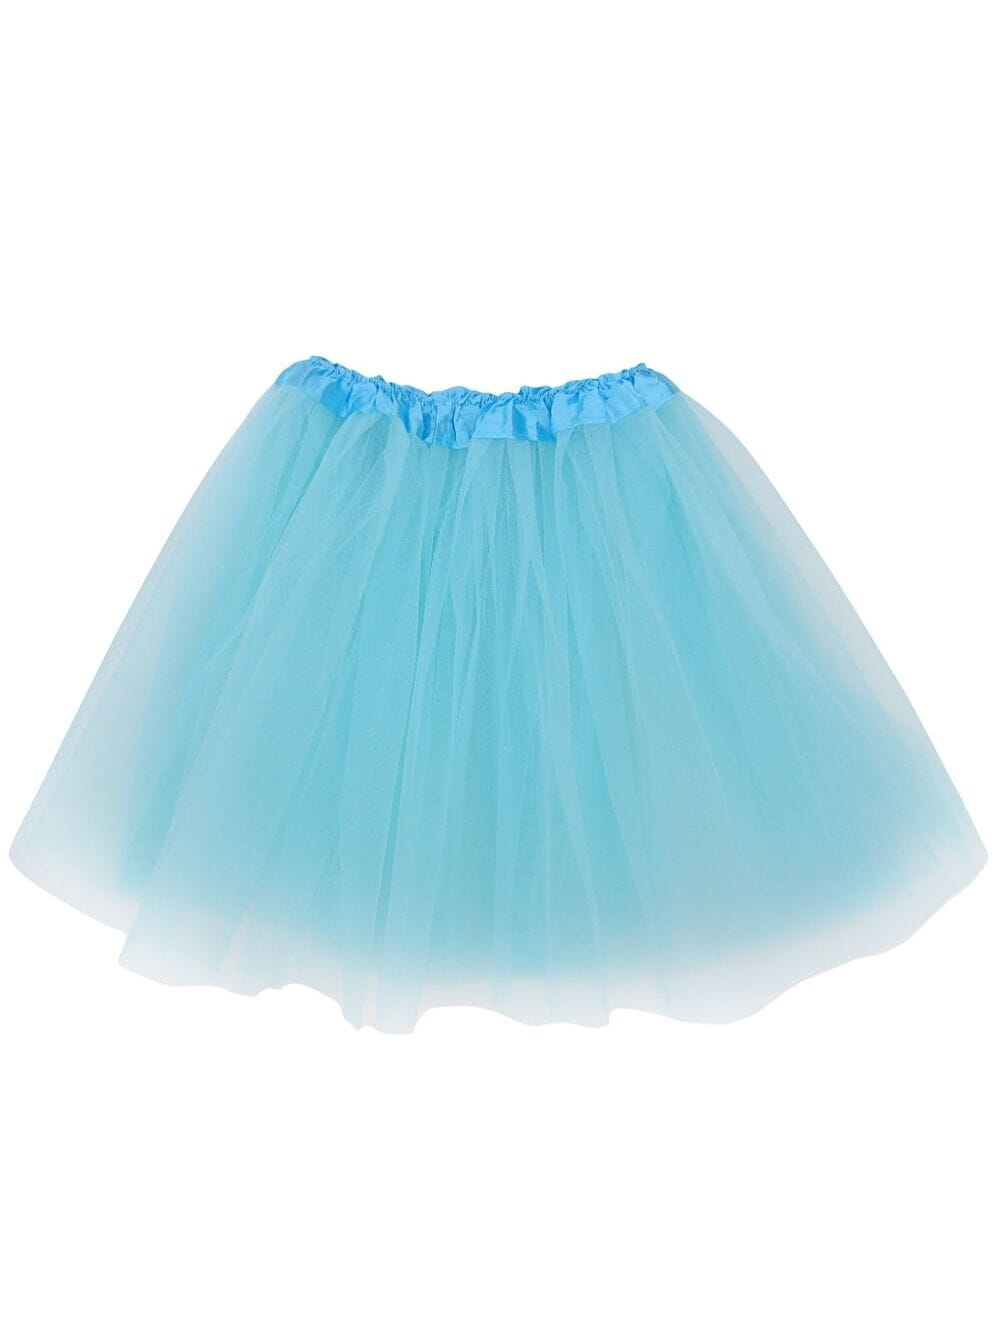 Aqua Blue Tutu Skirt for Adult - Women's Size 3-Layer Basic Ballet Costume Dance Tutus - Sydney So Sweet